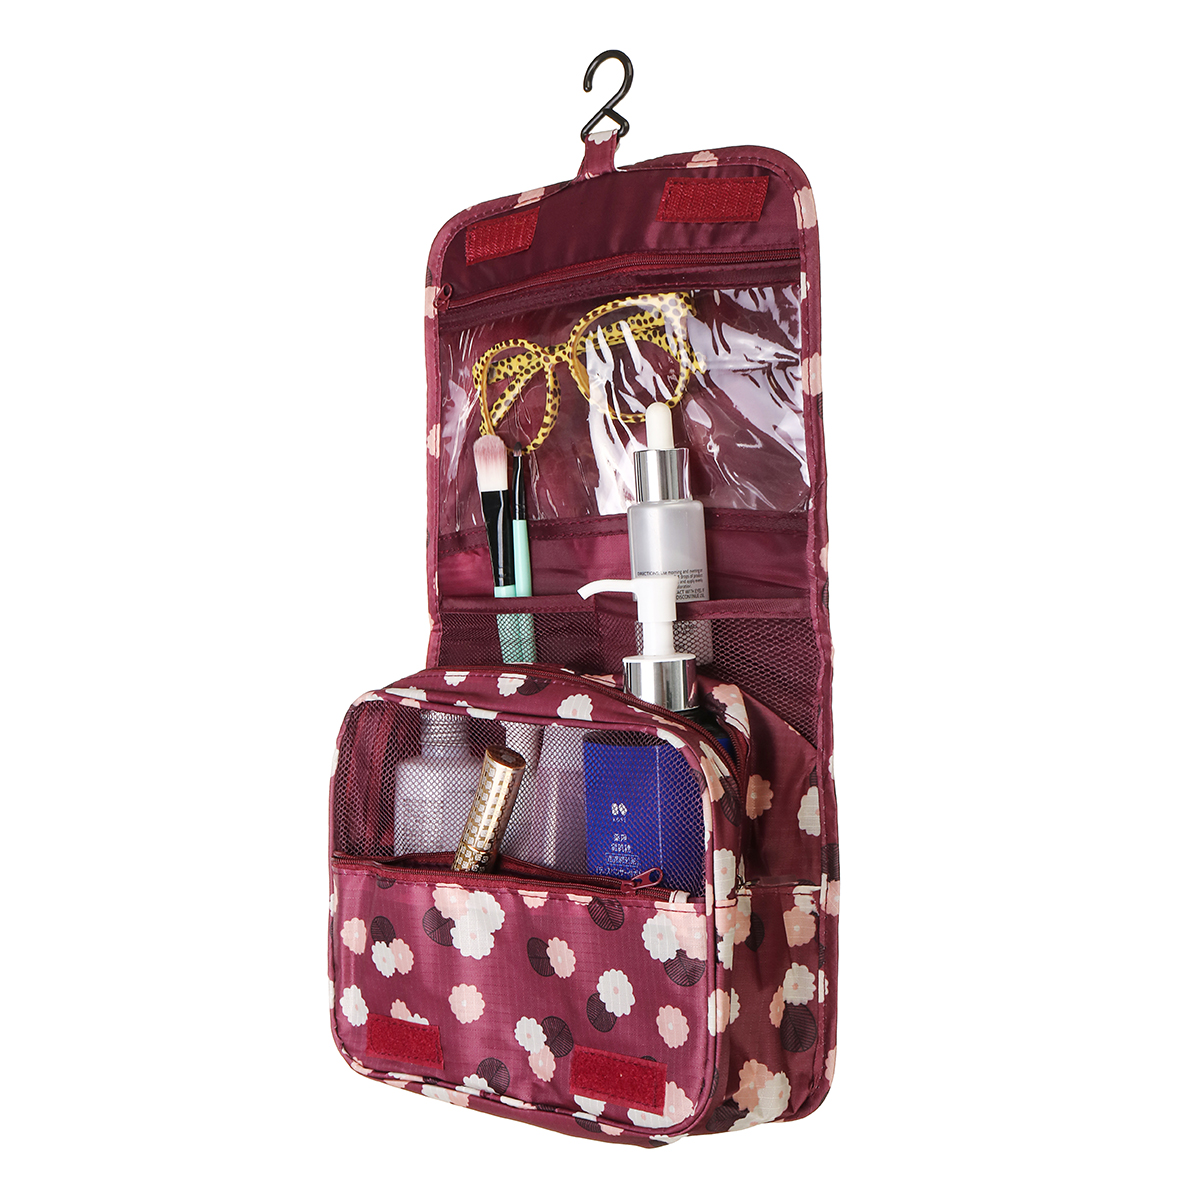 Portable Travel Toiletry Bag Travel Home Organizer Carry Cosmetic Makeup Bag, Wash Organizer Storage Handbag Pouch Bag - image 5 of 7